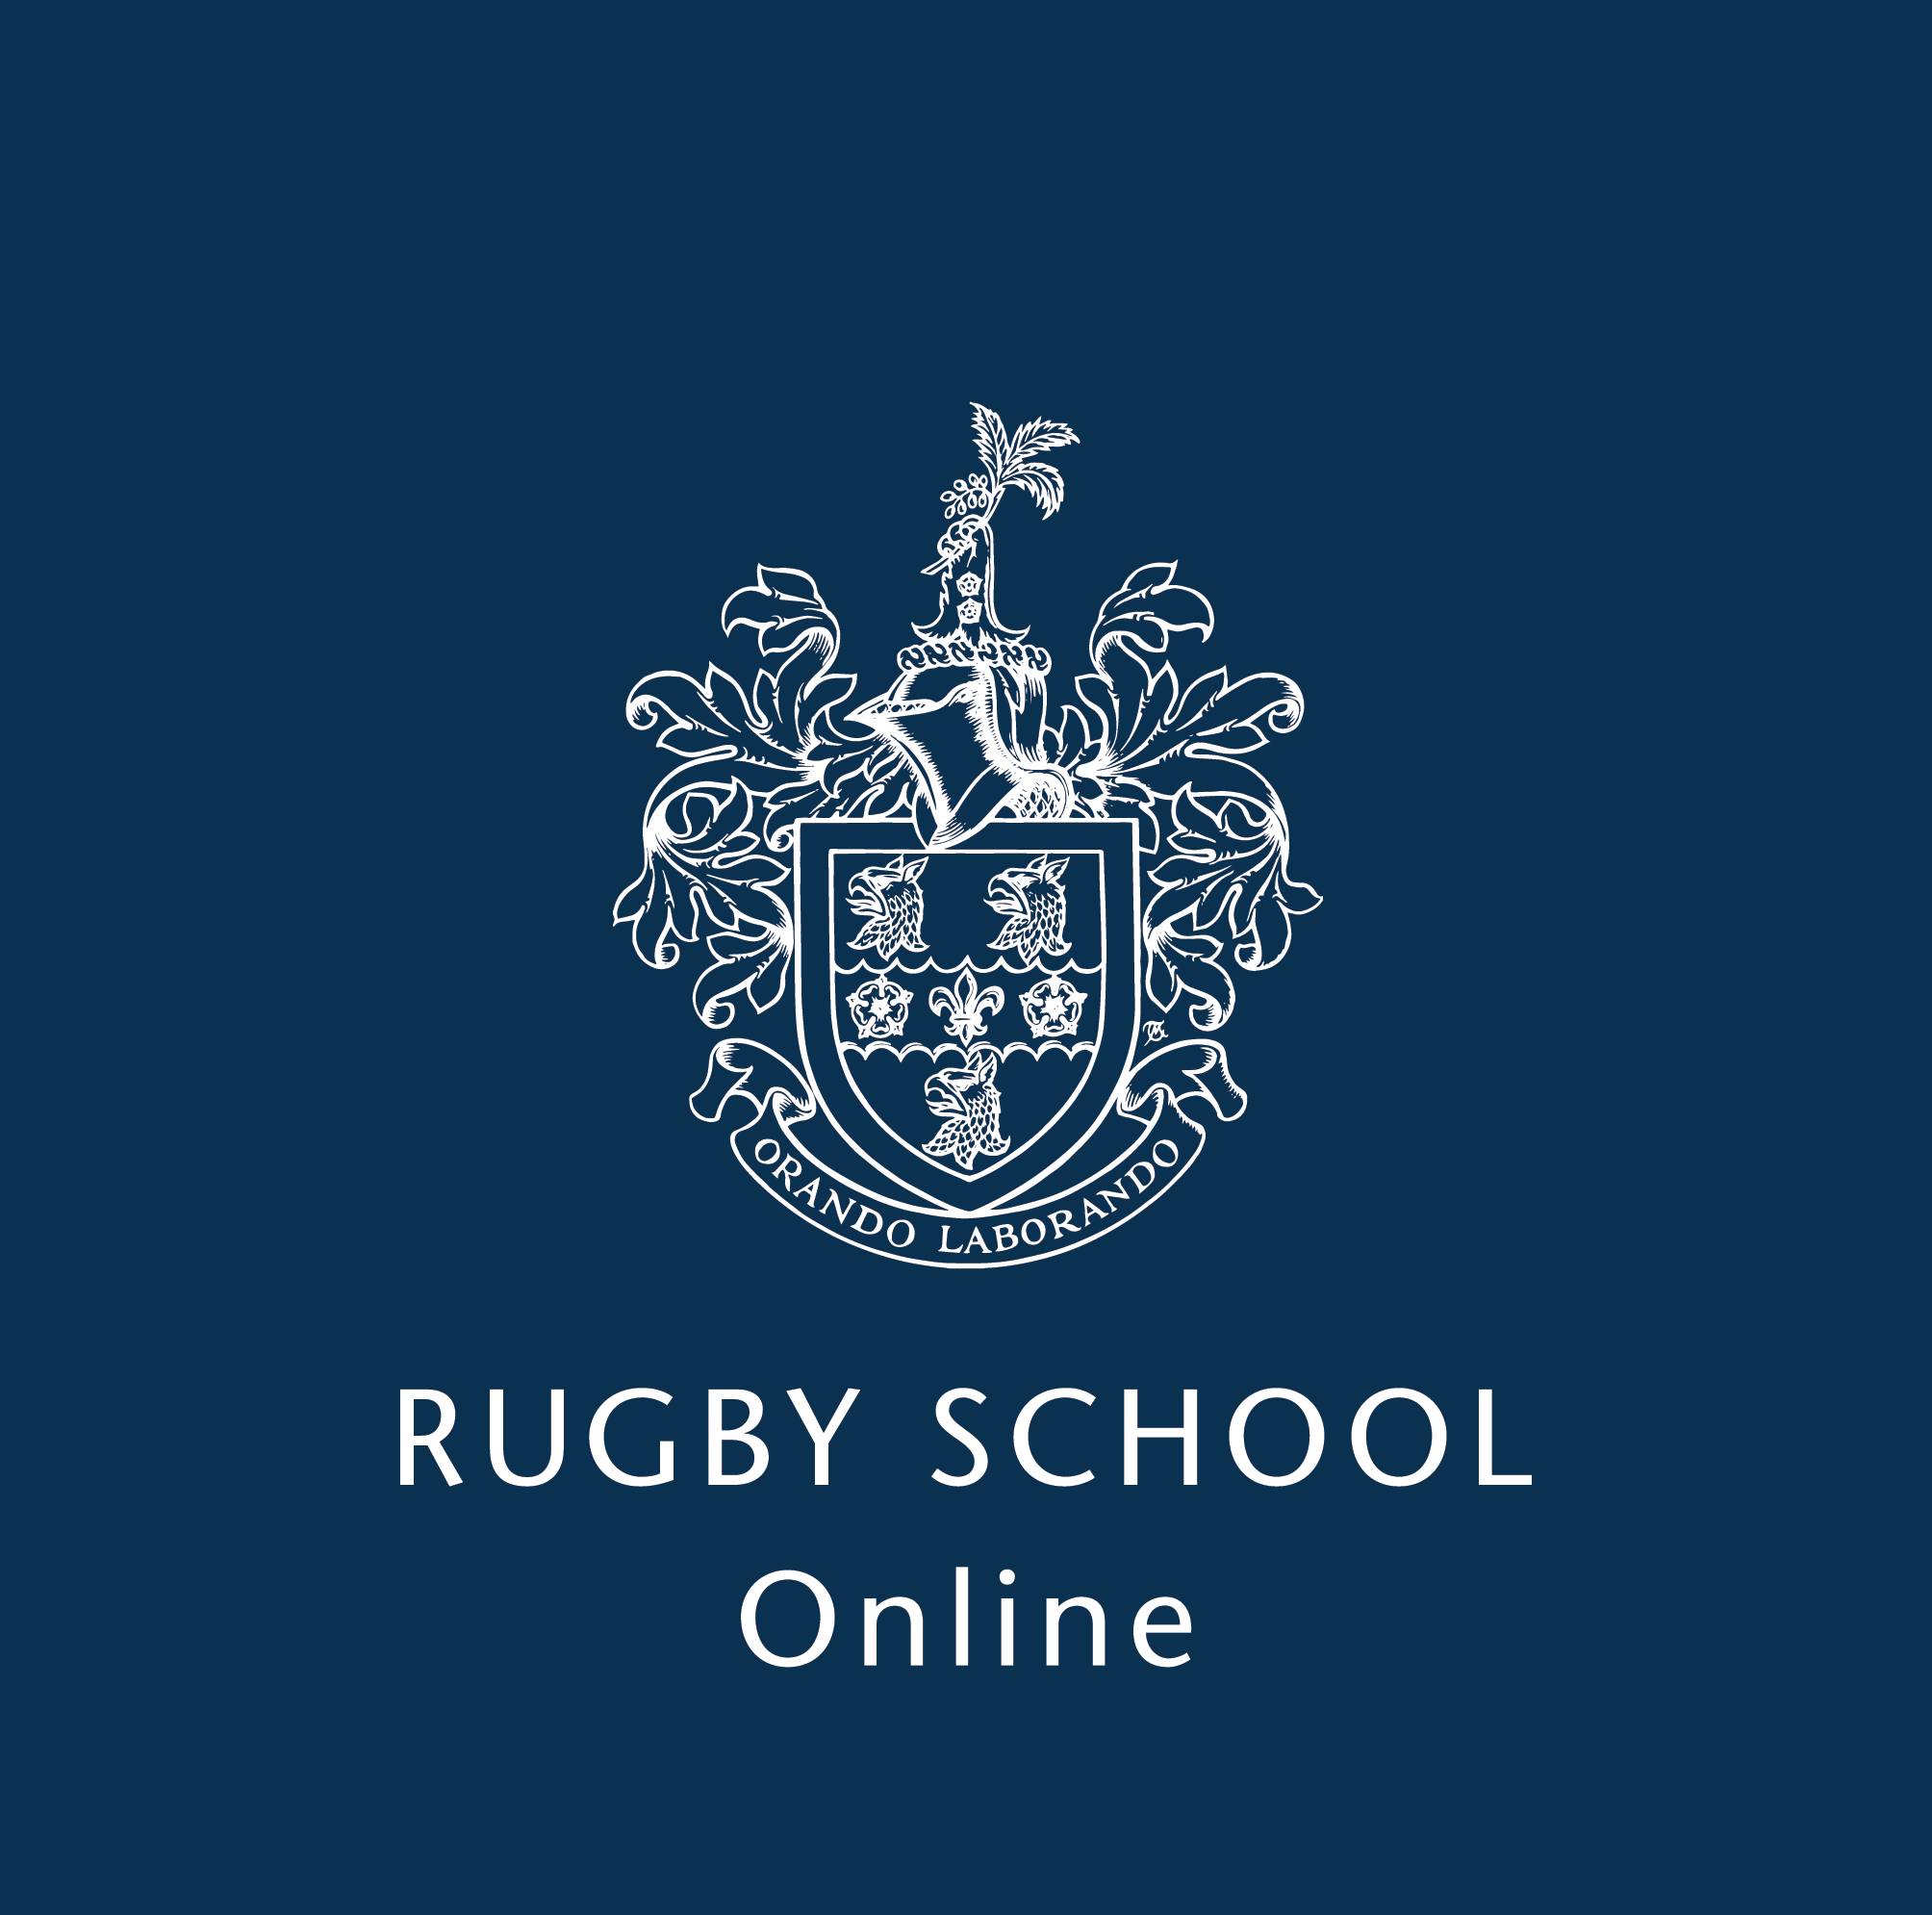 Rugby School Online